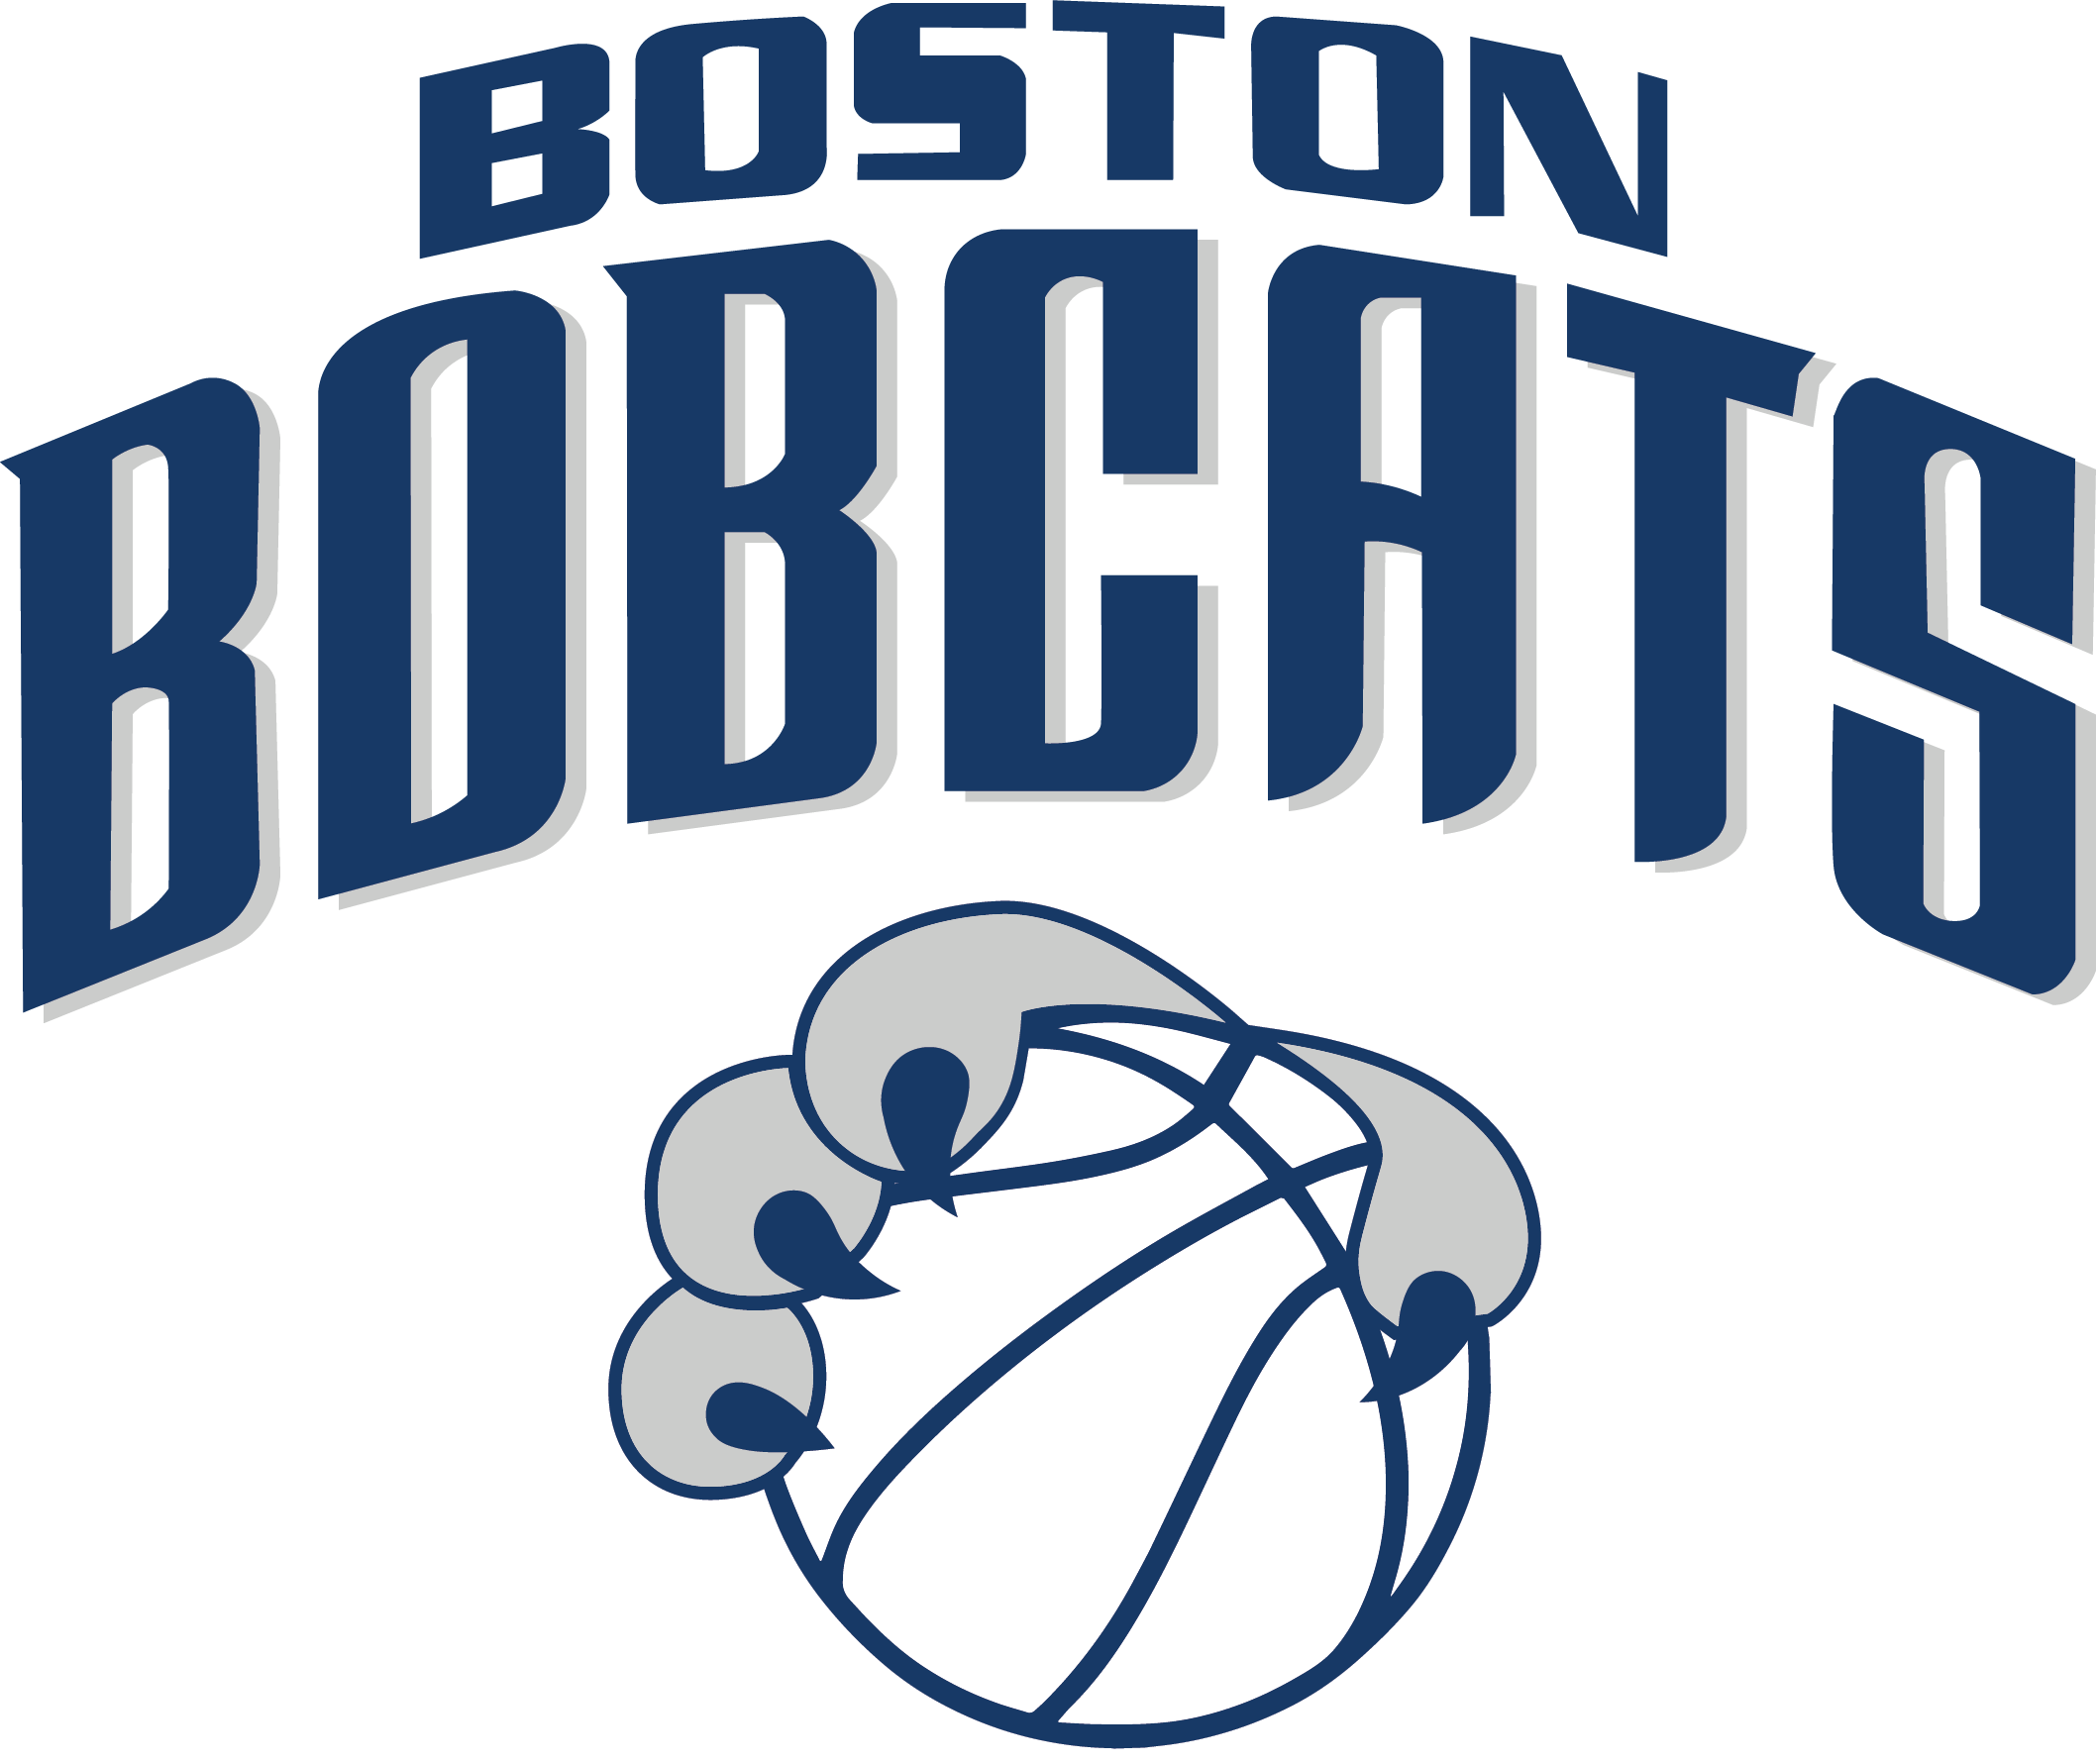 BOSTON BOBCATS LOGO (Blue)